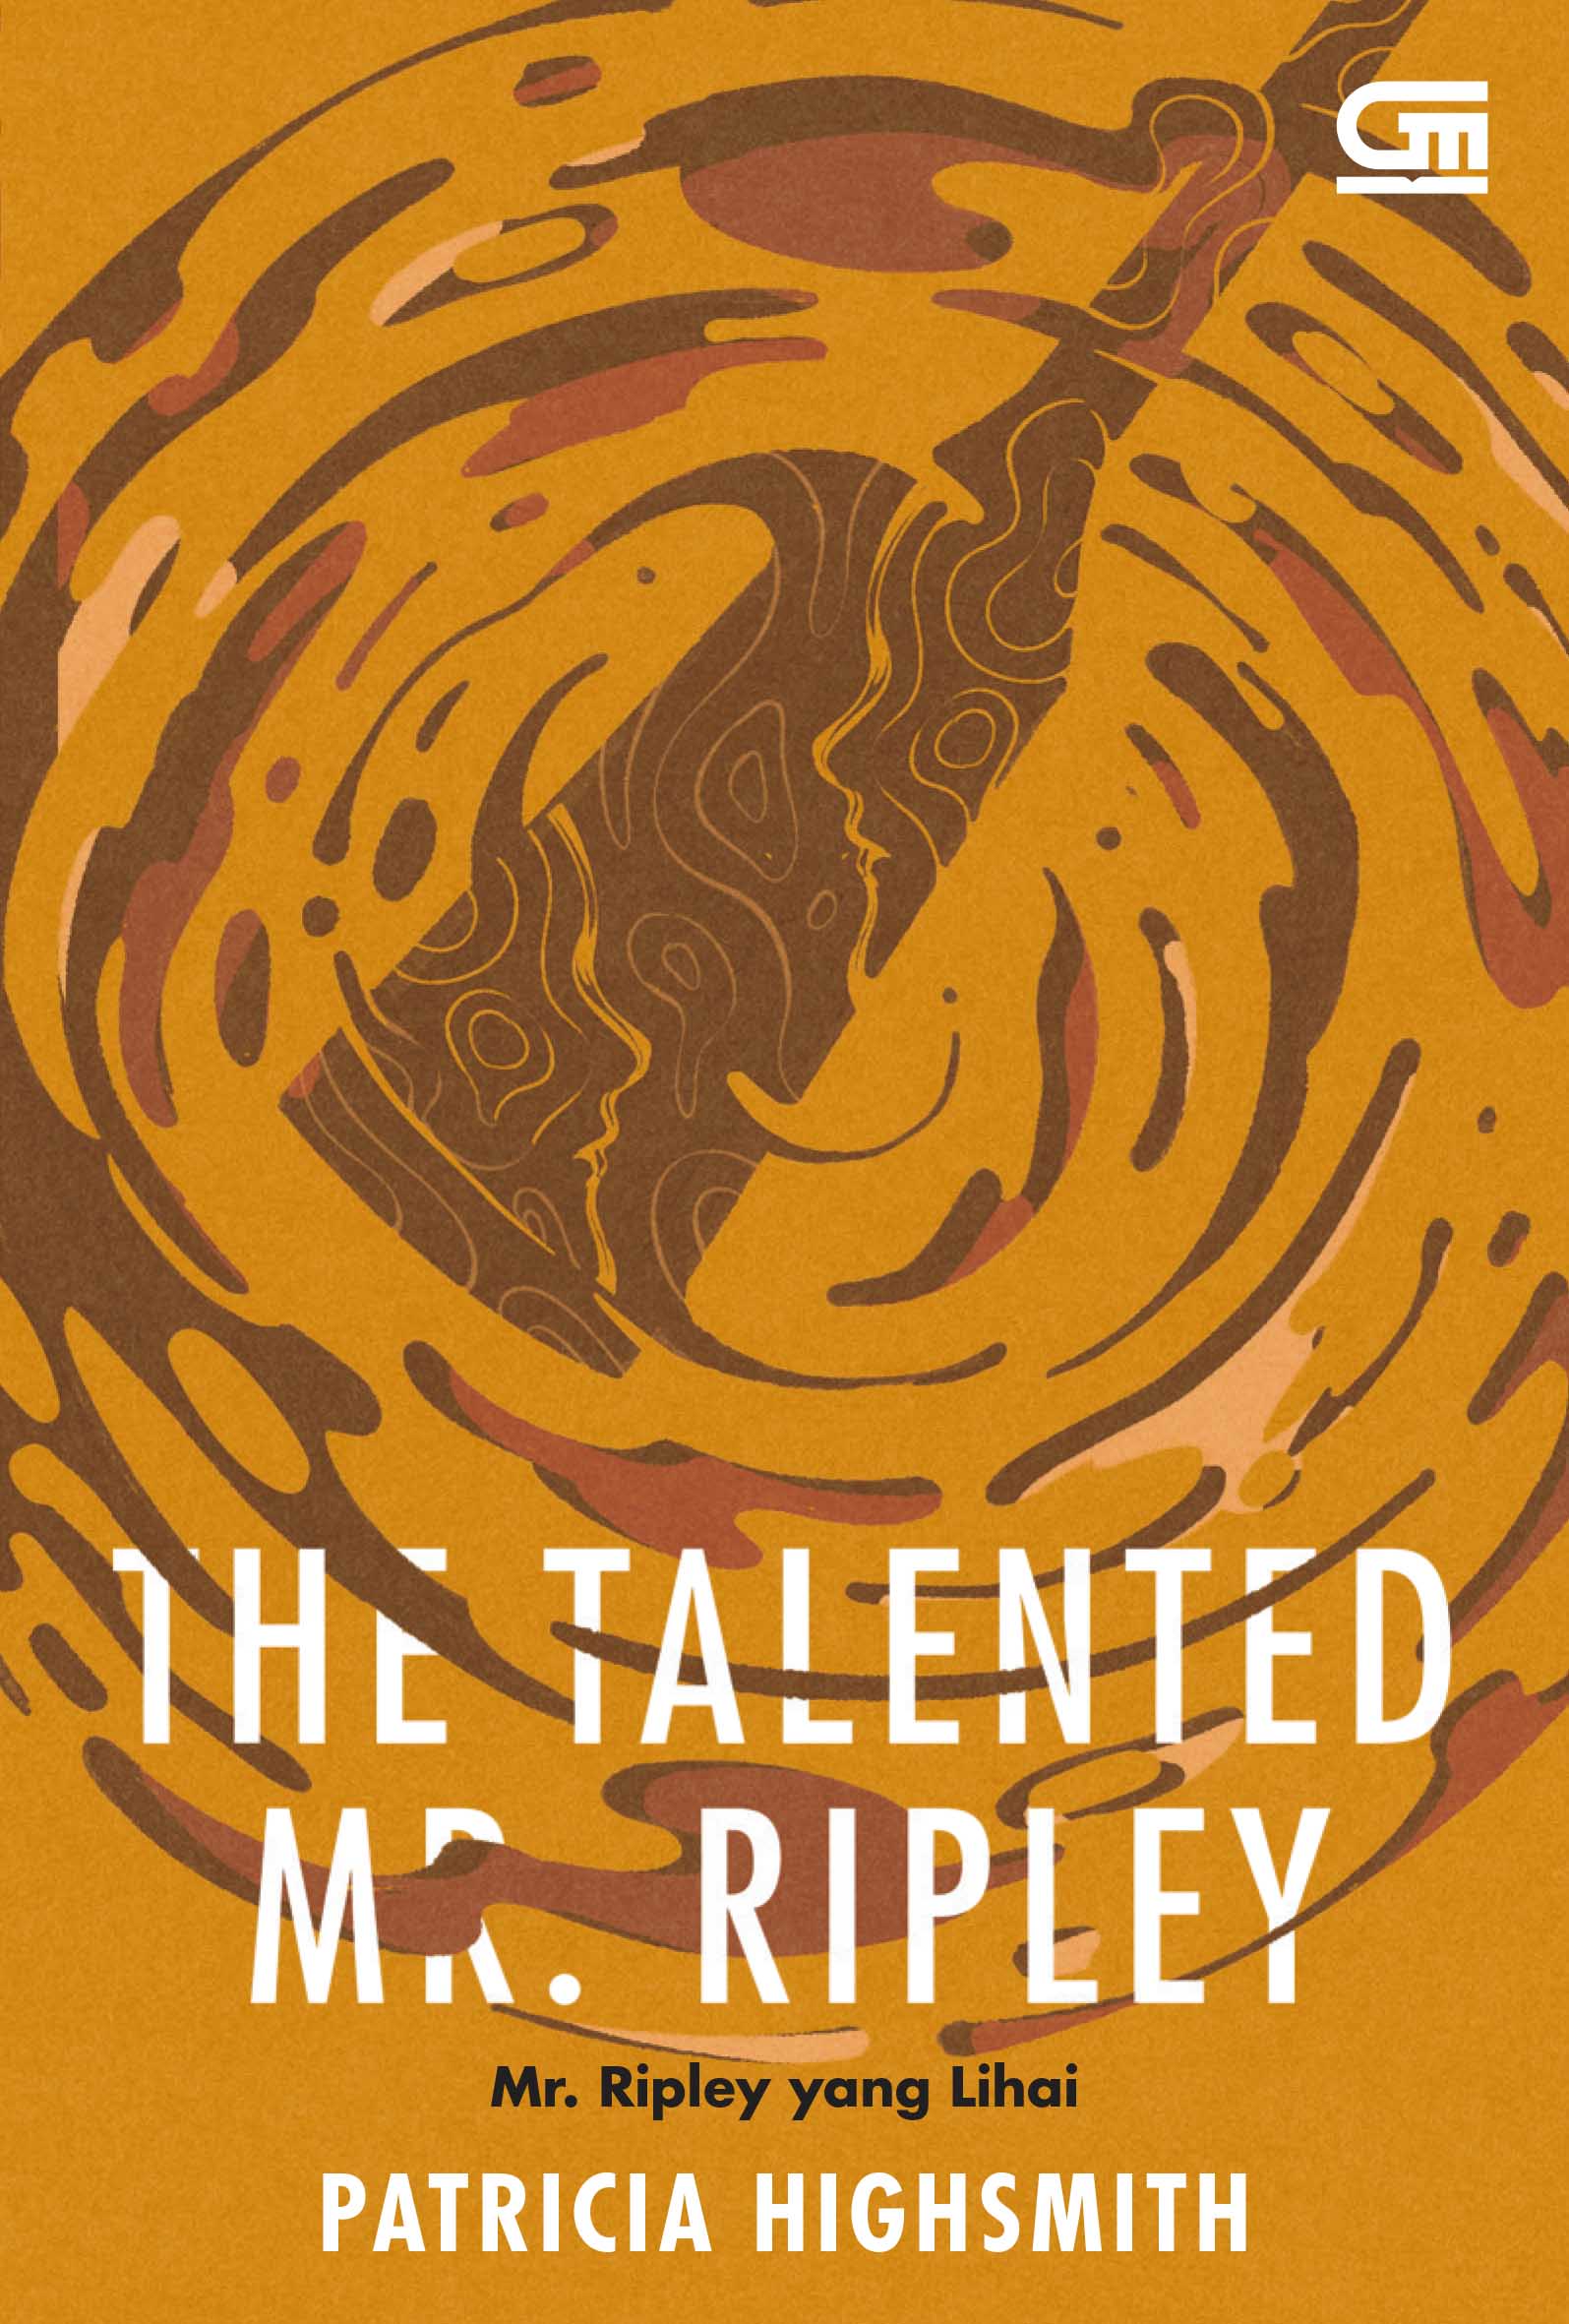 Mr. Ripley yang Lihai (The Talented Mr. Ripley)